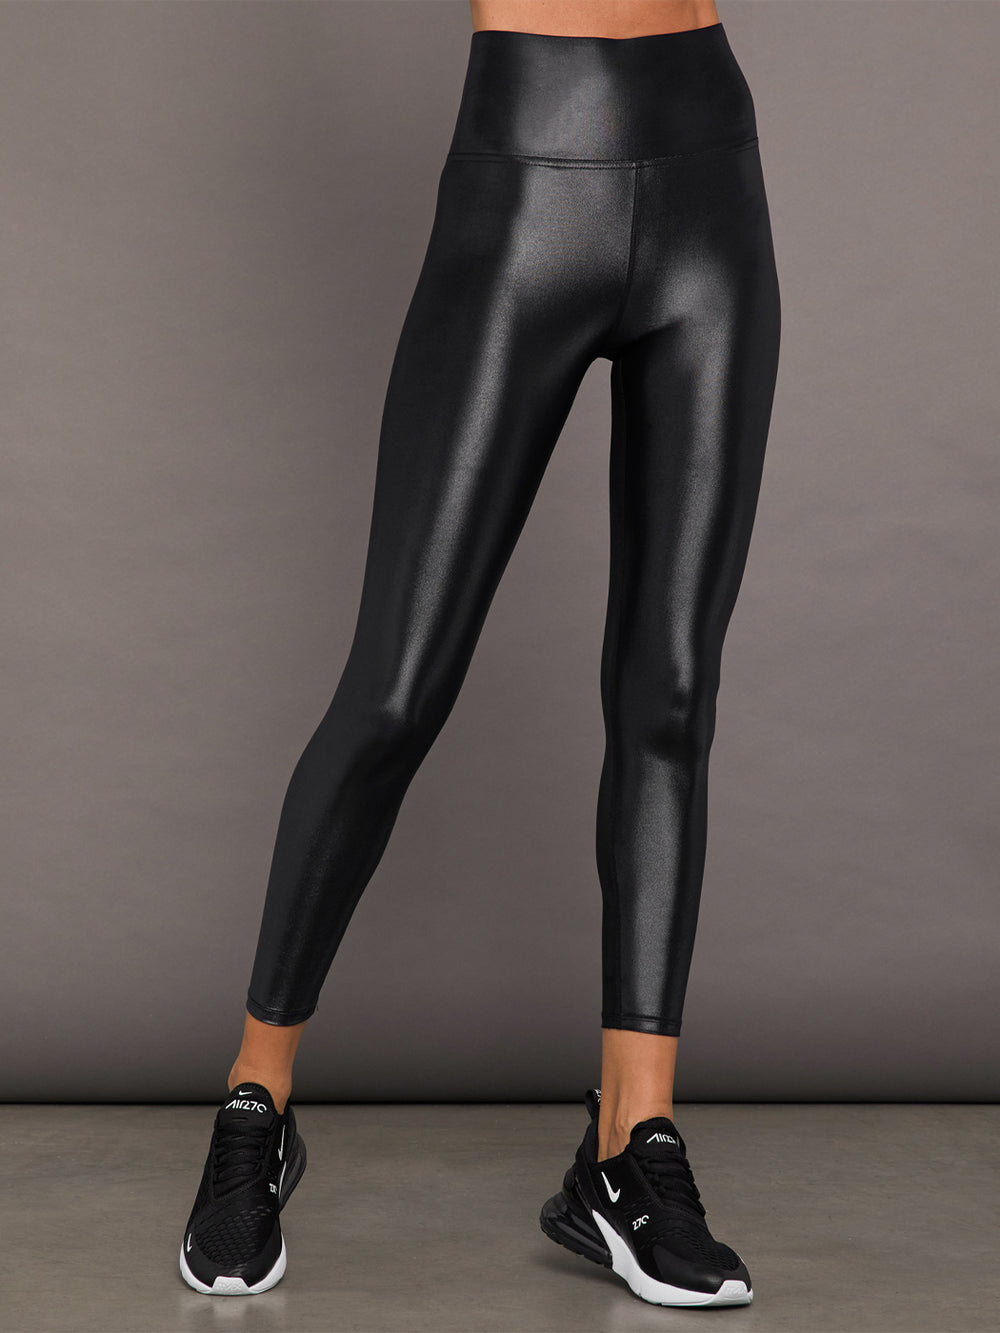 Black shiny leggings